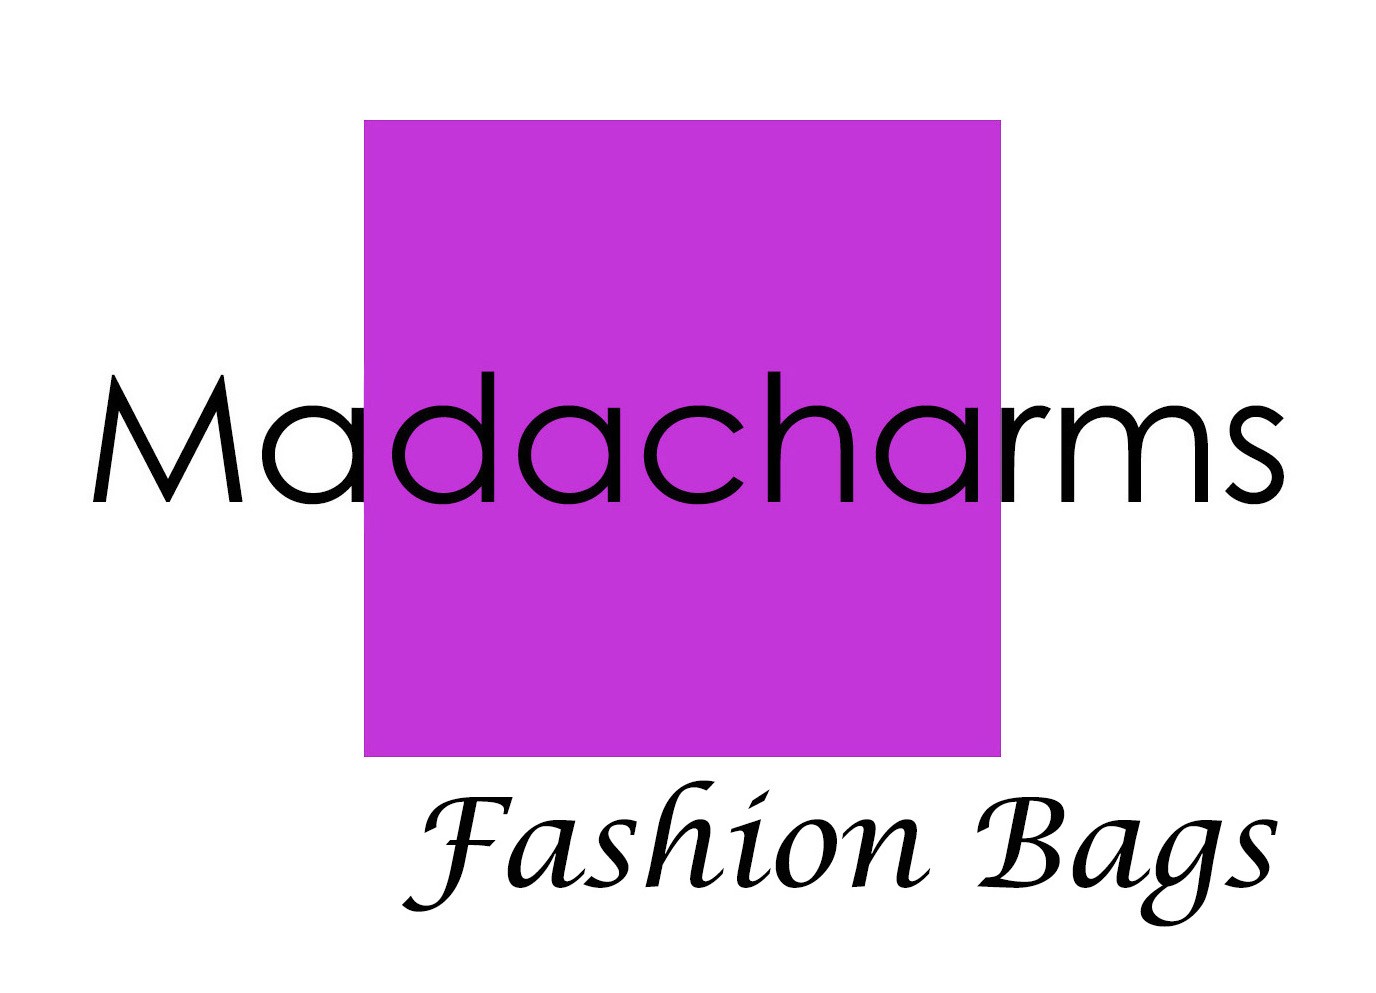 Madacharms Fashion Bags